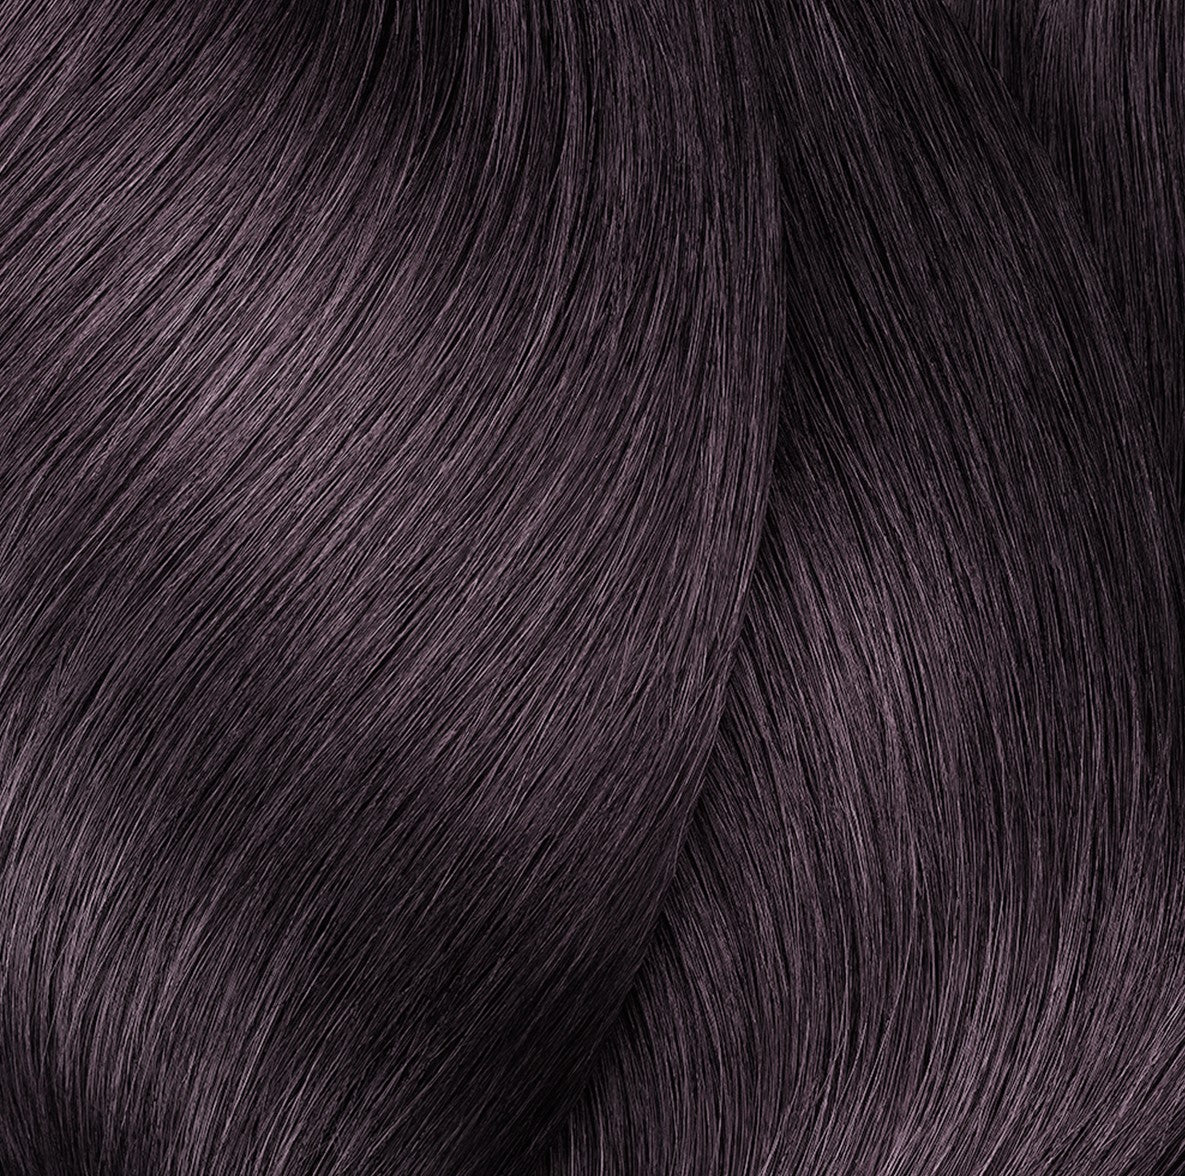 L’Oréal Professionnel Dia Light Semi Permanent Hair Colour - 5.20 Light Intense Iridescent Brown 50ml